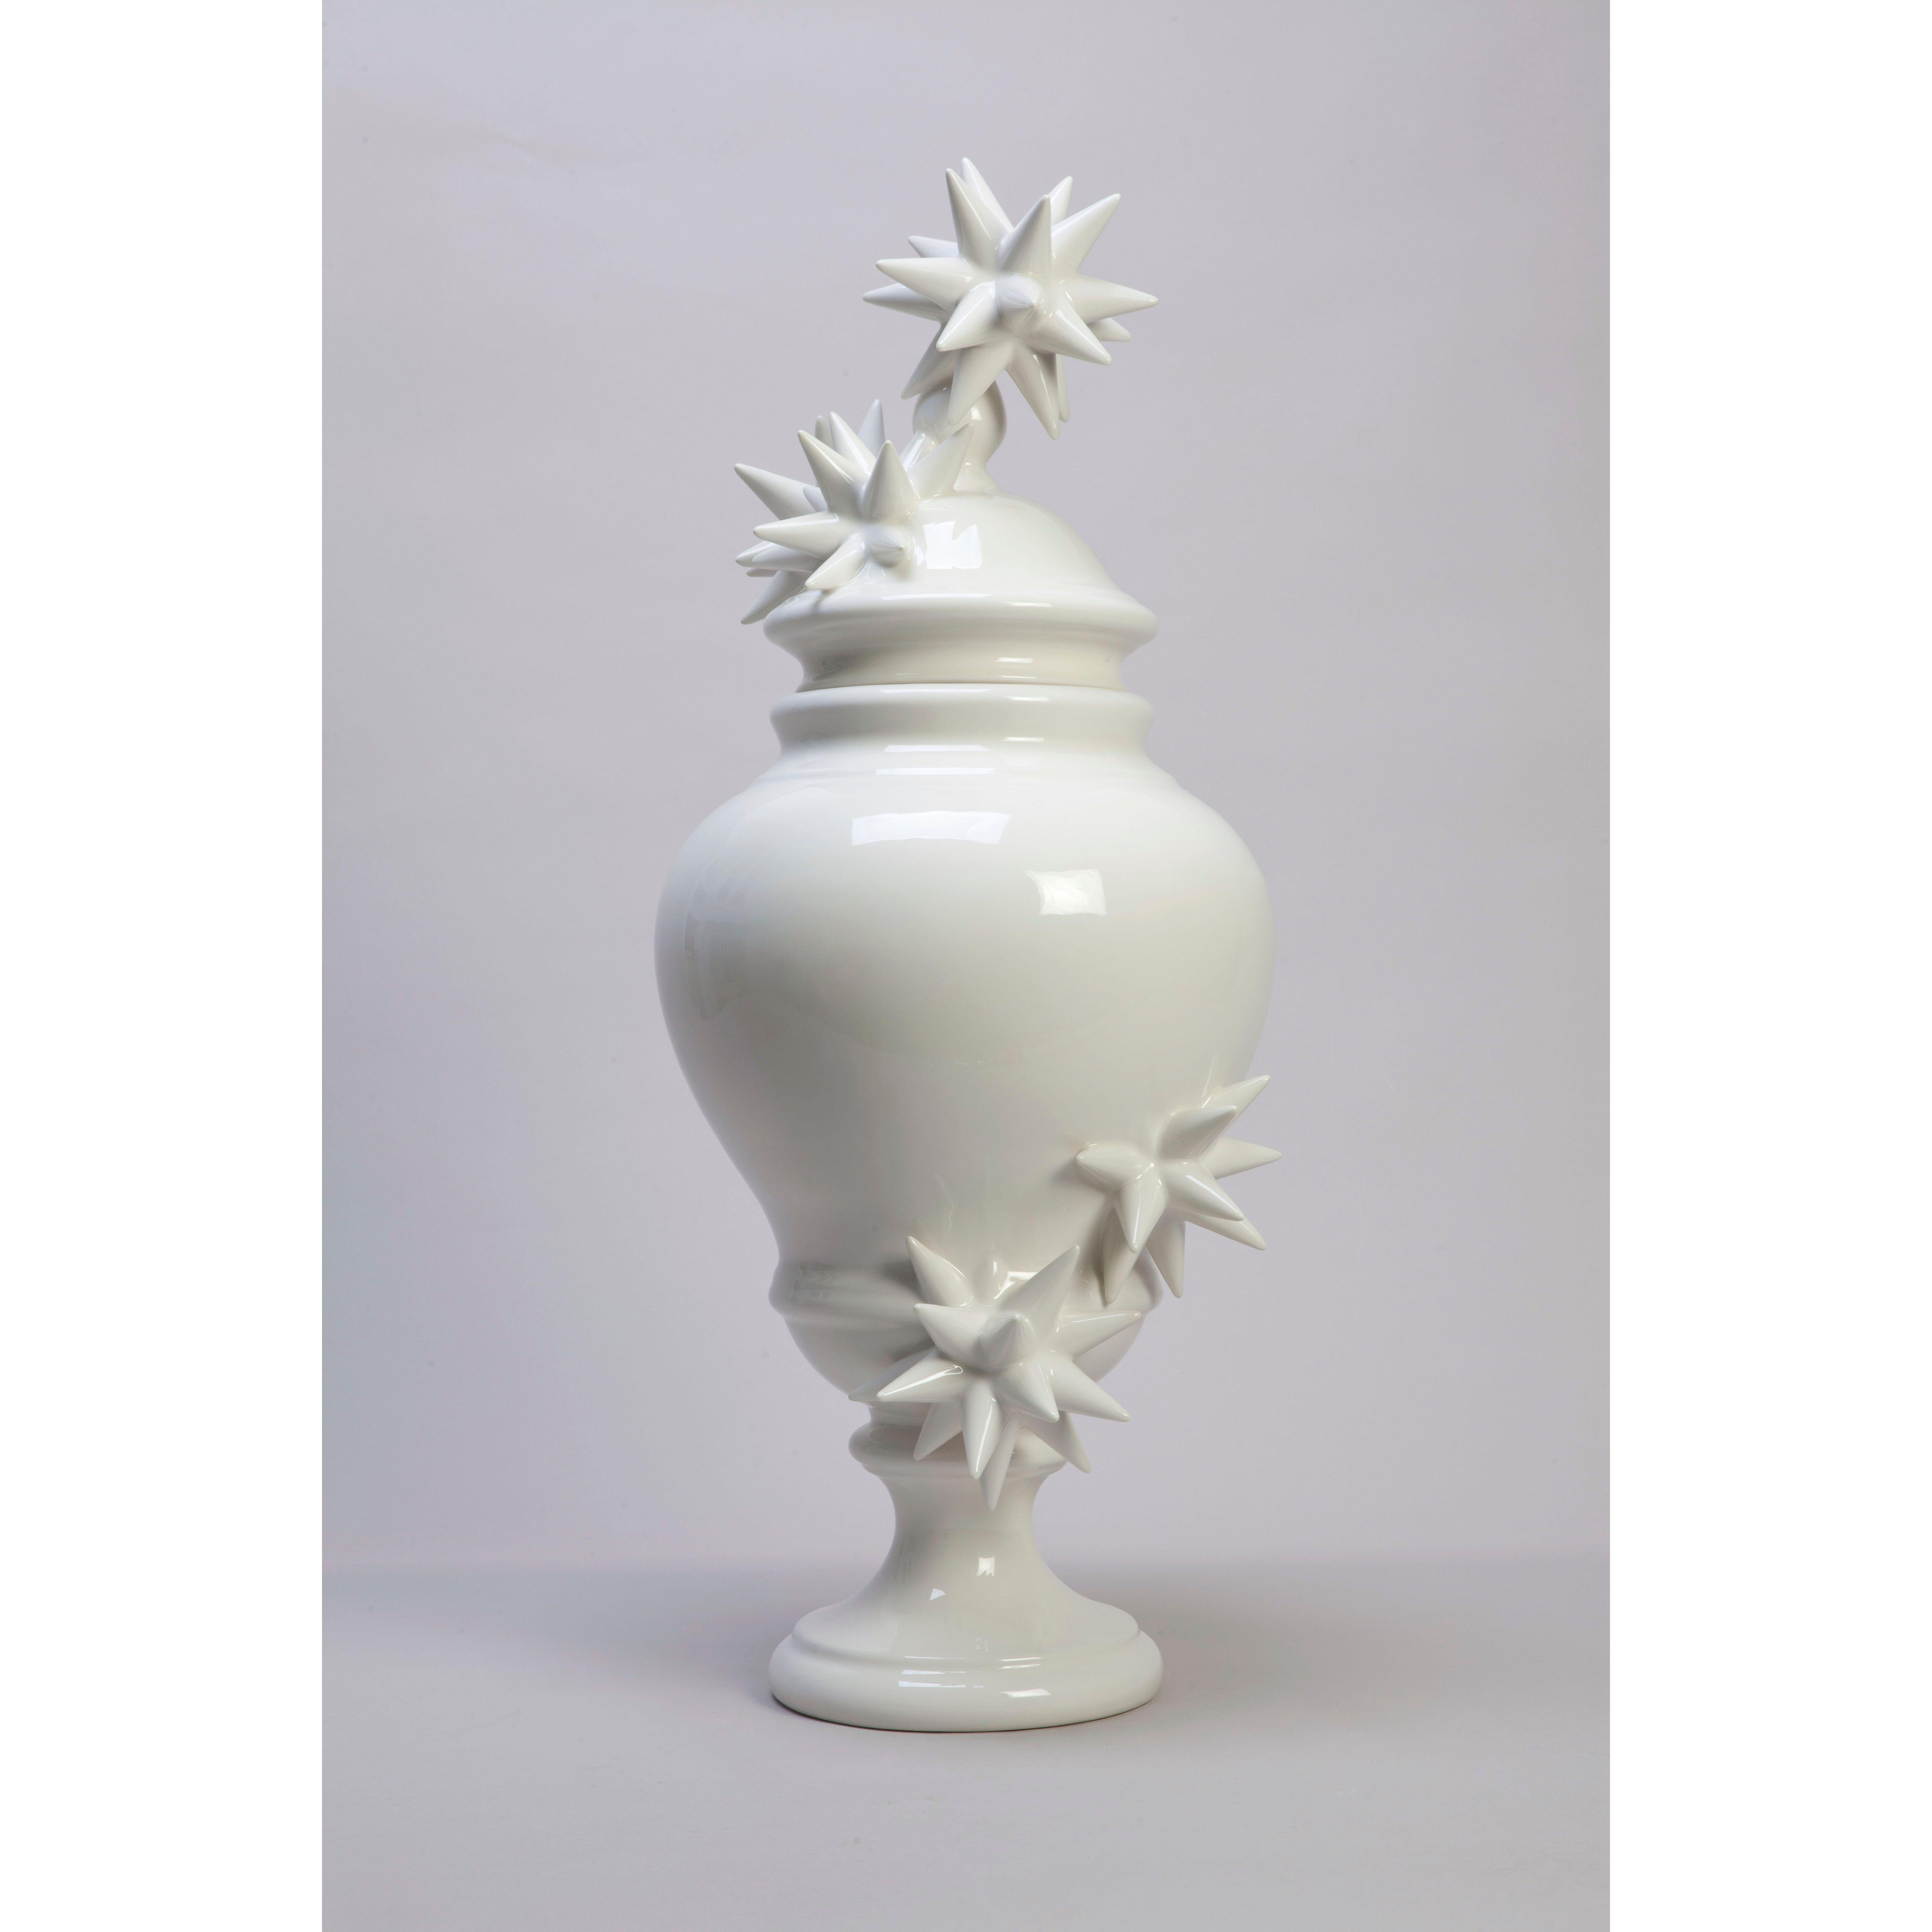 Art Deco Large White Ceramic vase by Andrea Salvatori 21st Century Contemporary For Sale